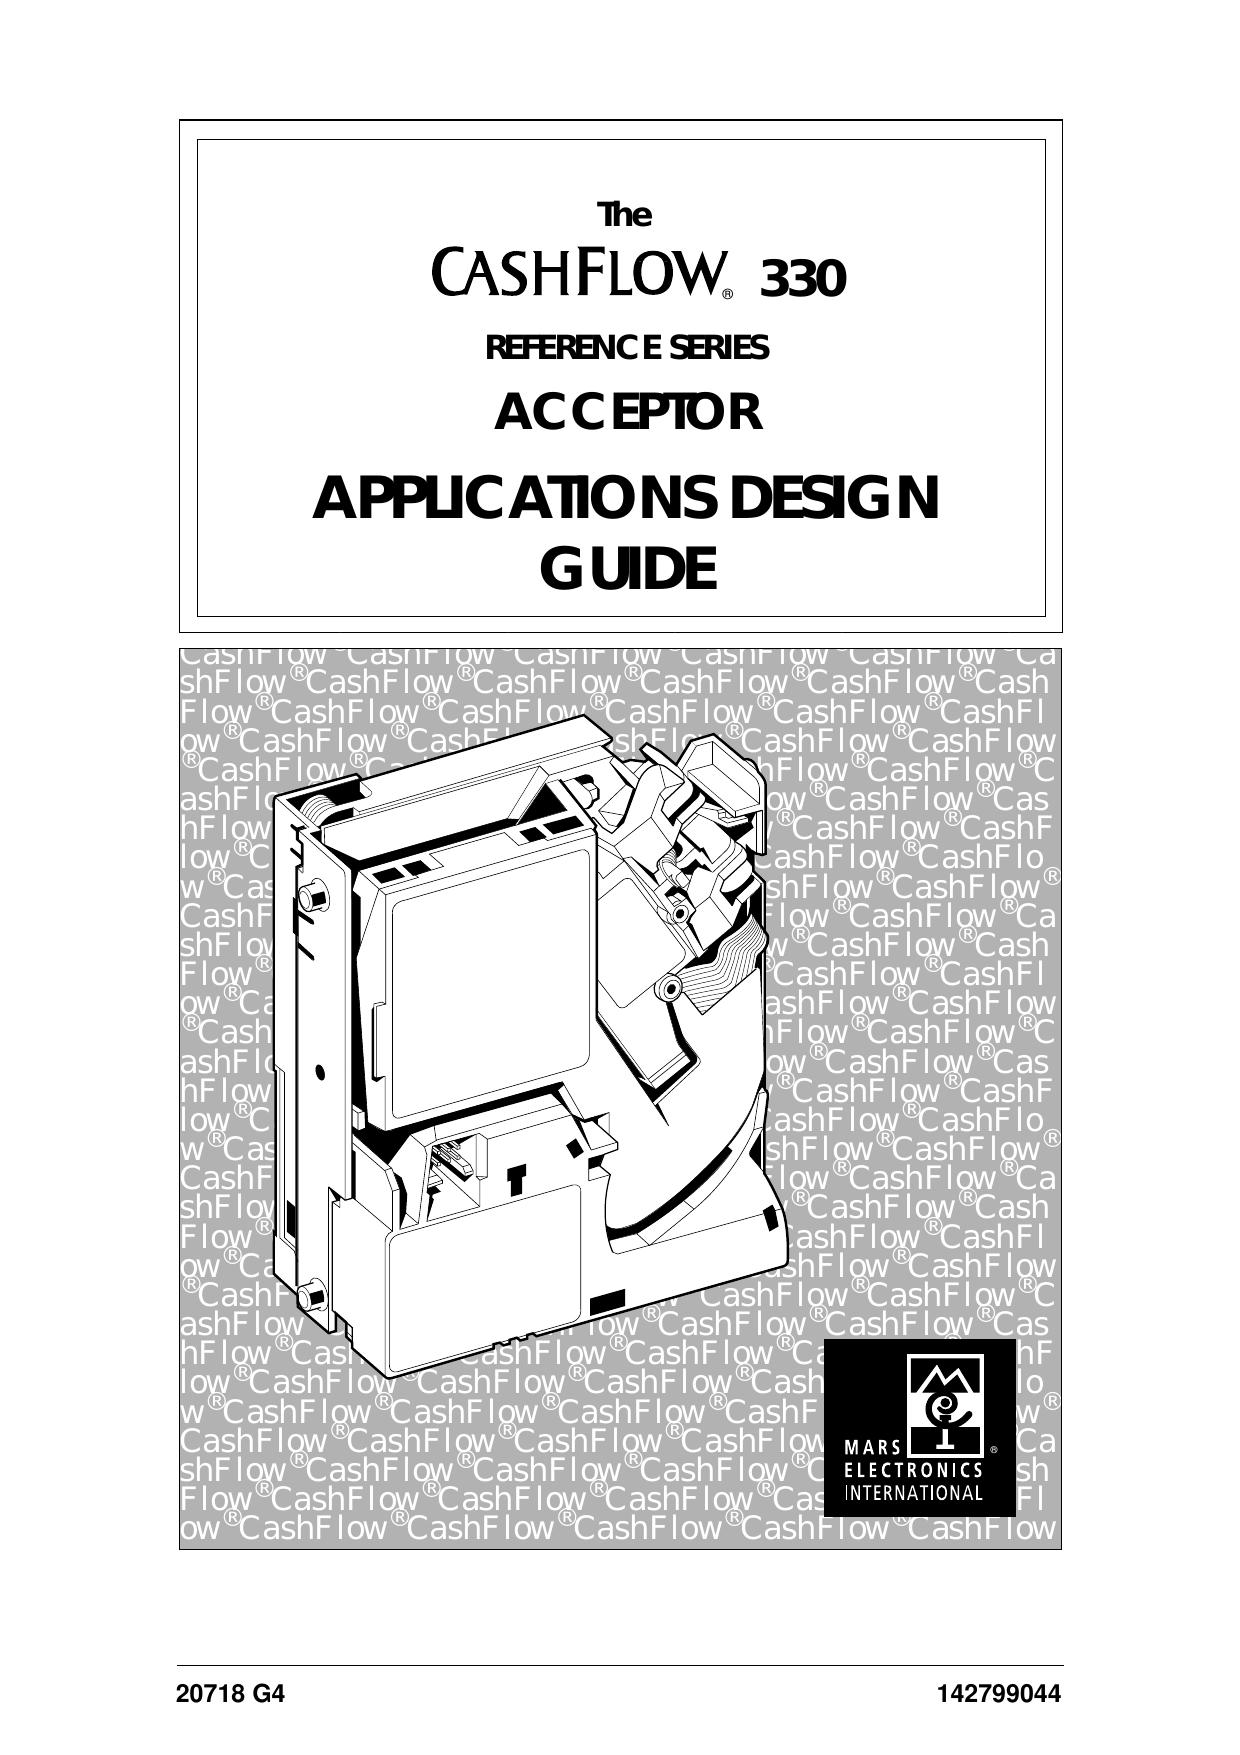 CF330 Applications Design Guide GB